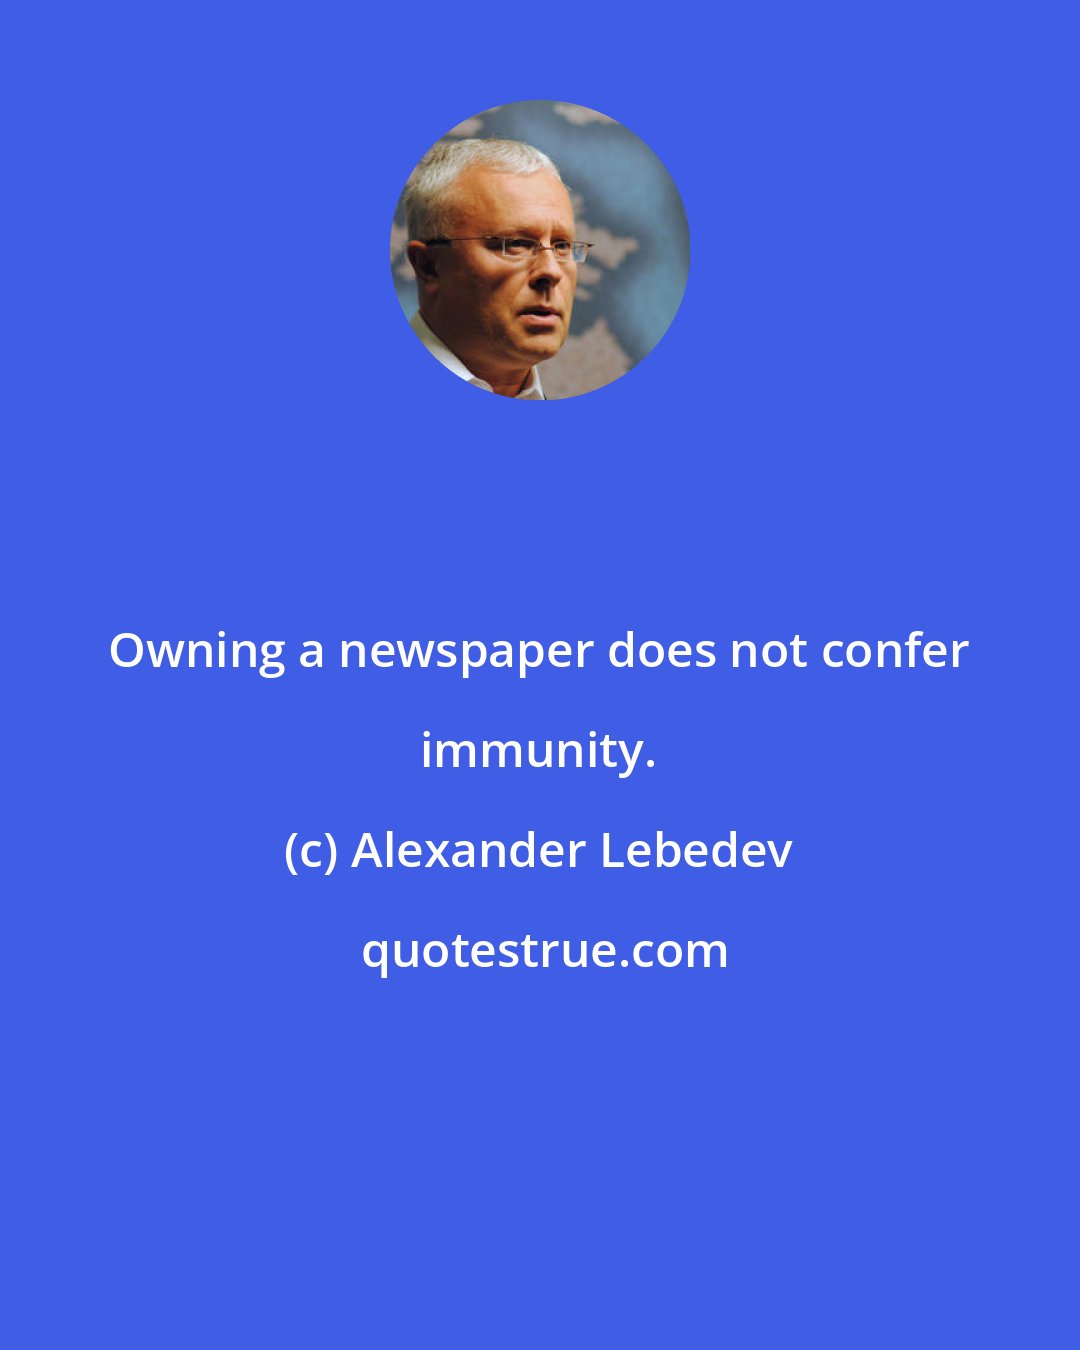 Alexander Lebedev: Owning a newspaper does not confer immunity.